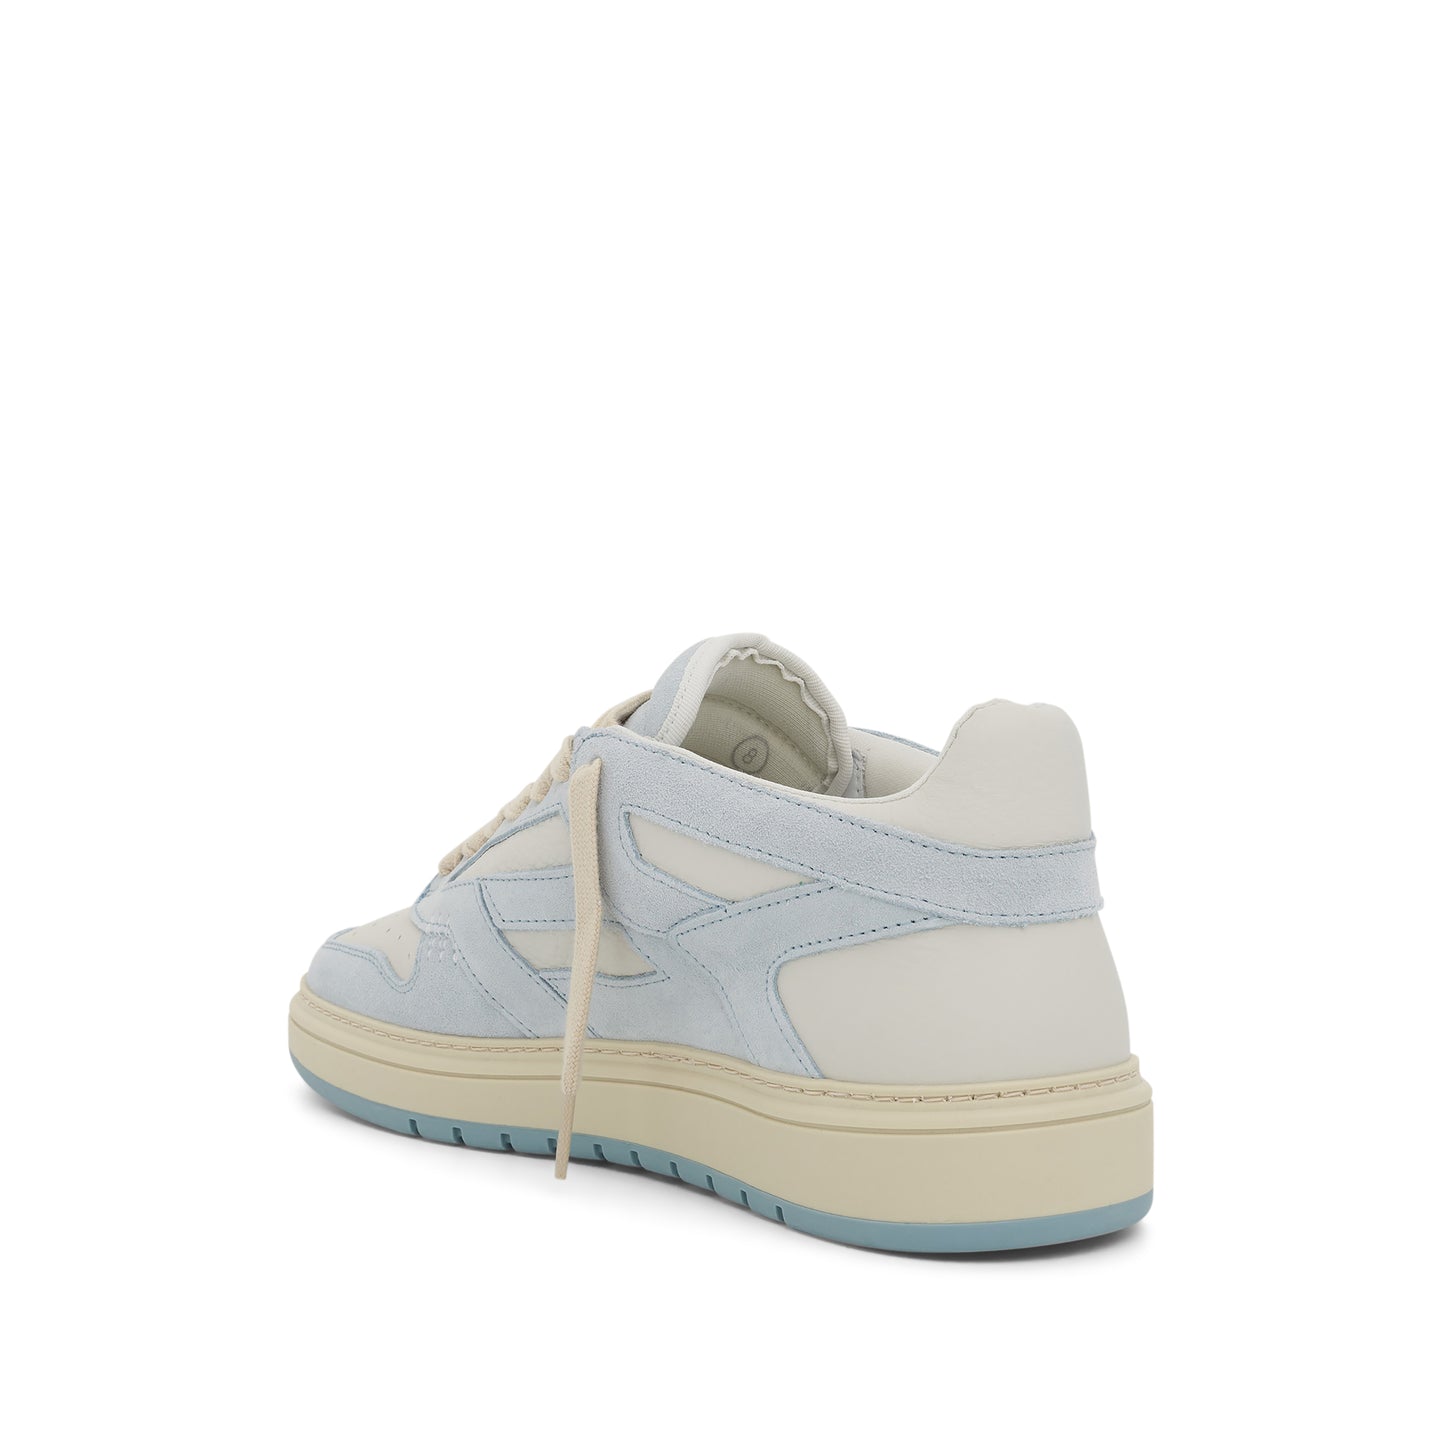 Reptor Low Sneaker in Baby Blue